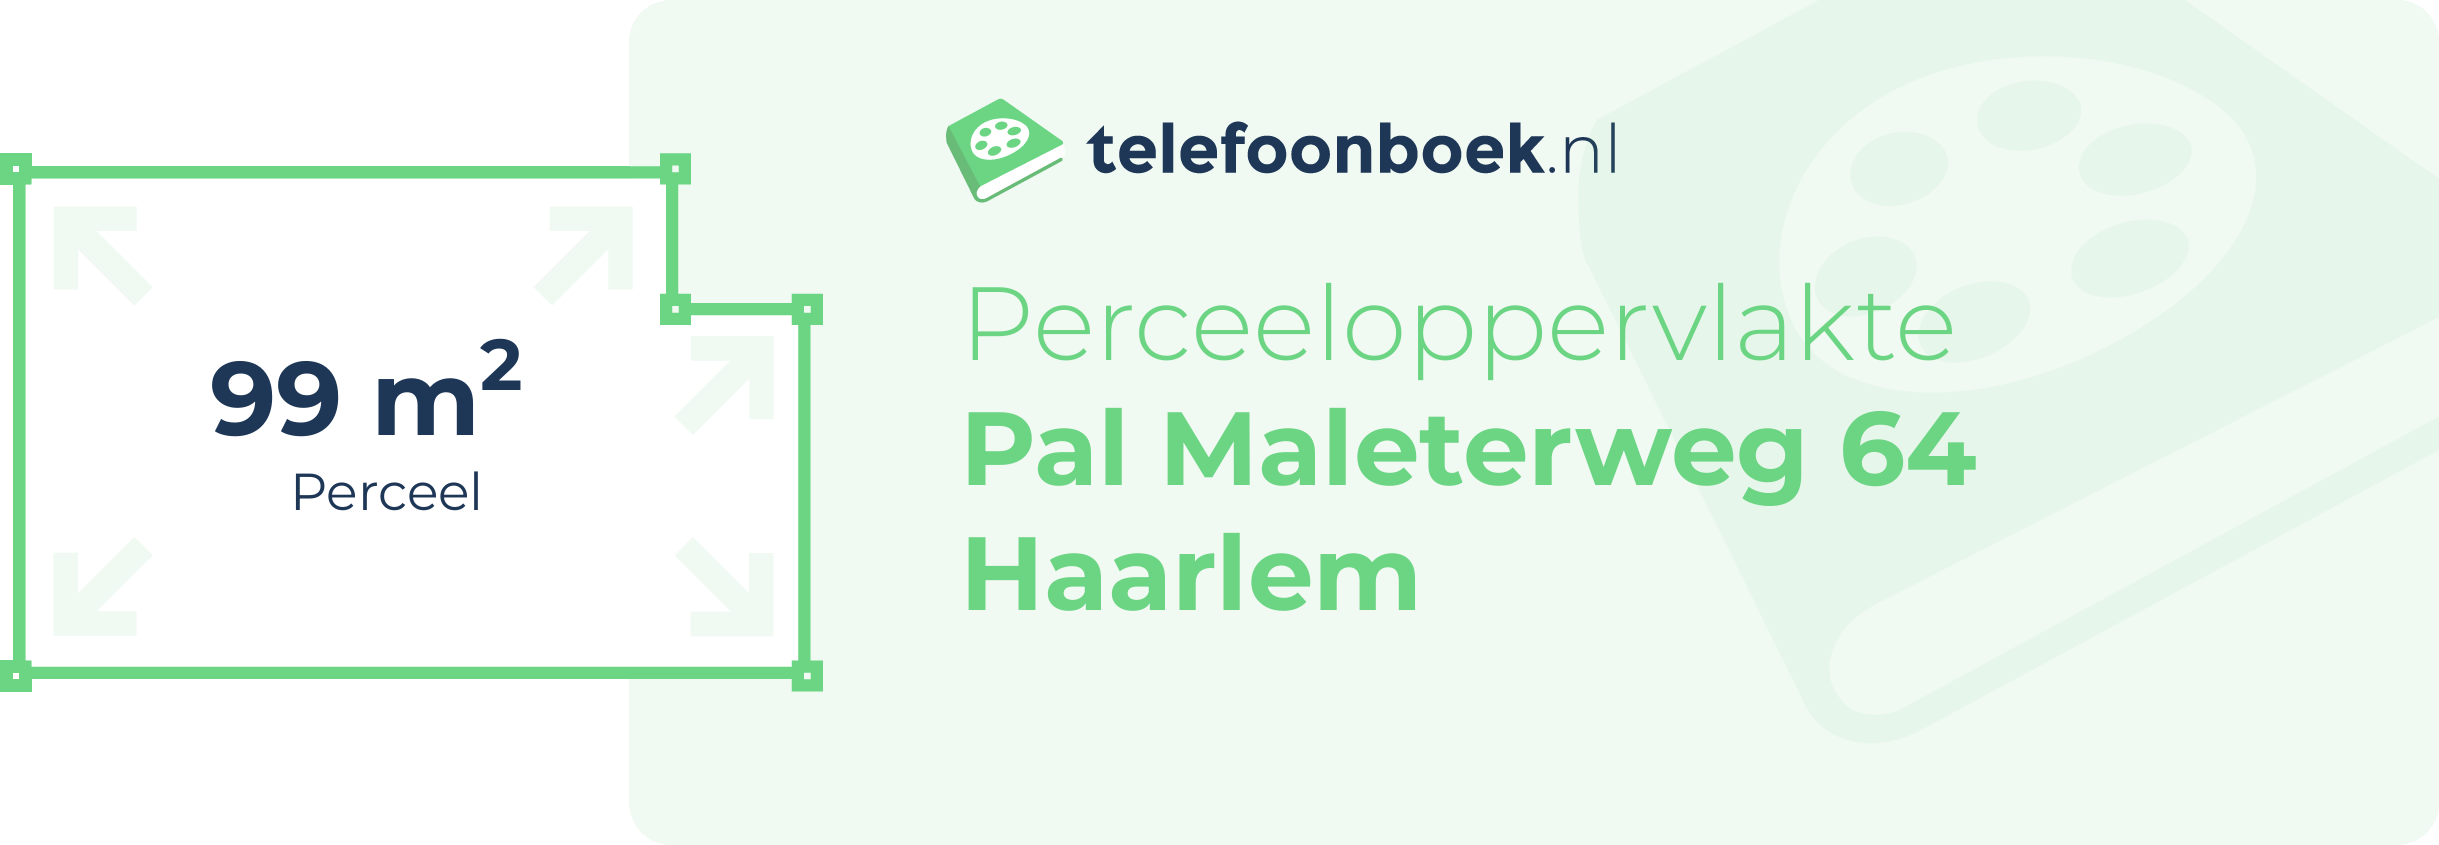 Perceeloppervlakte Pal Maleterweg 64 Haarlem